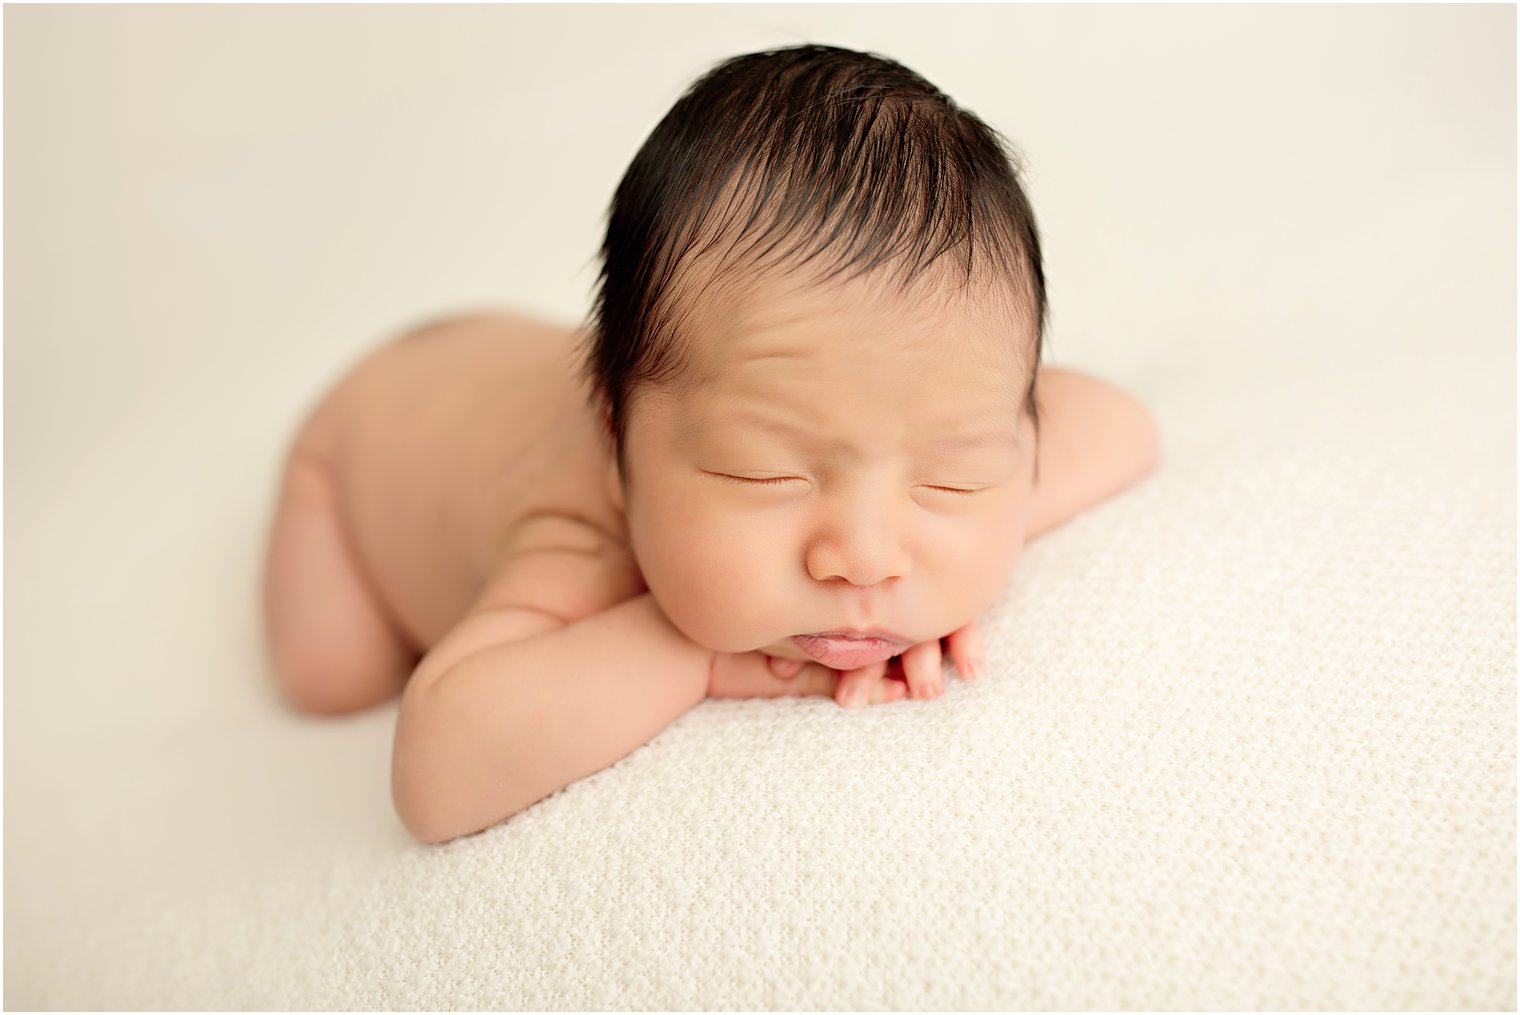 Newborn boy in chin on hands pose | Photo by Idalia Photography